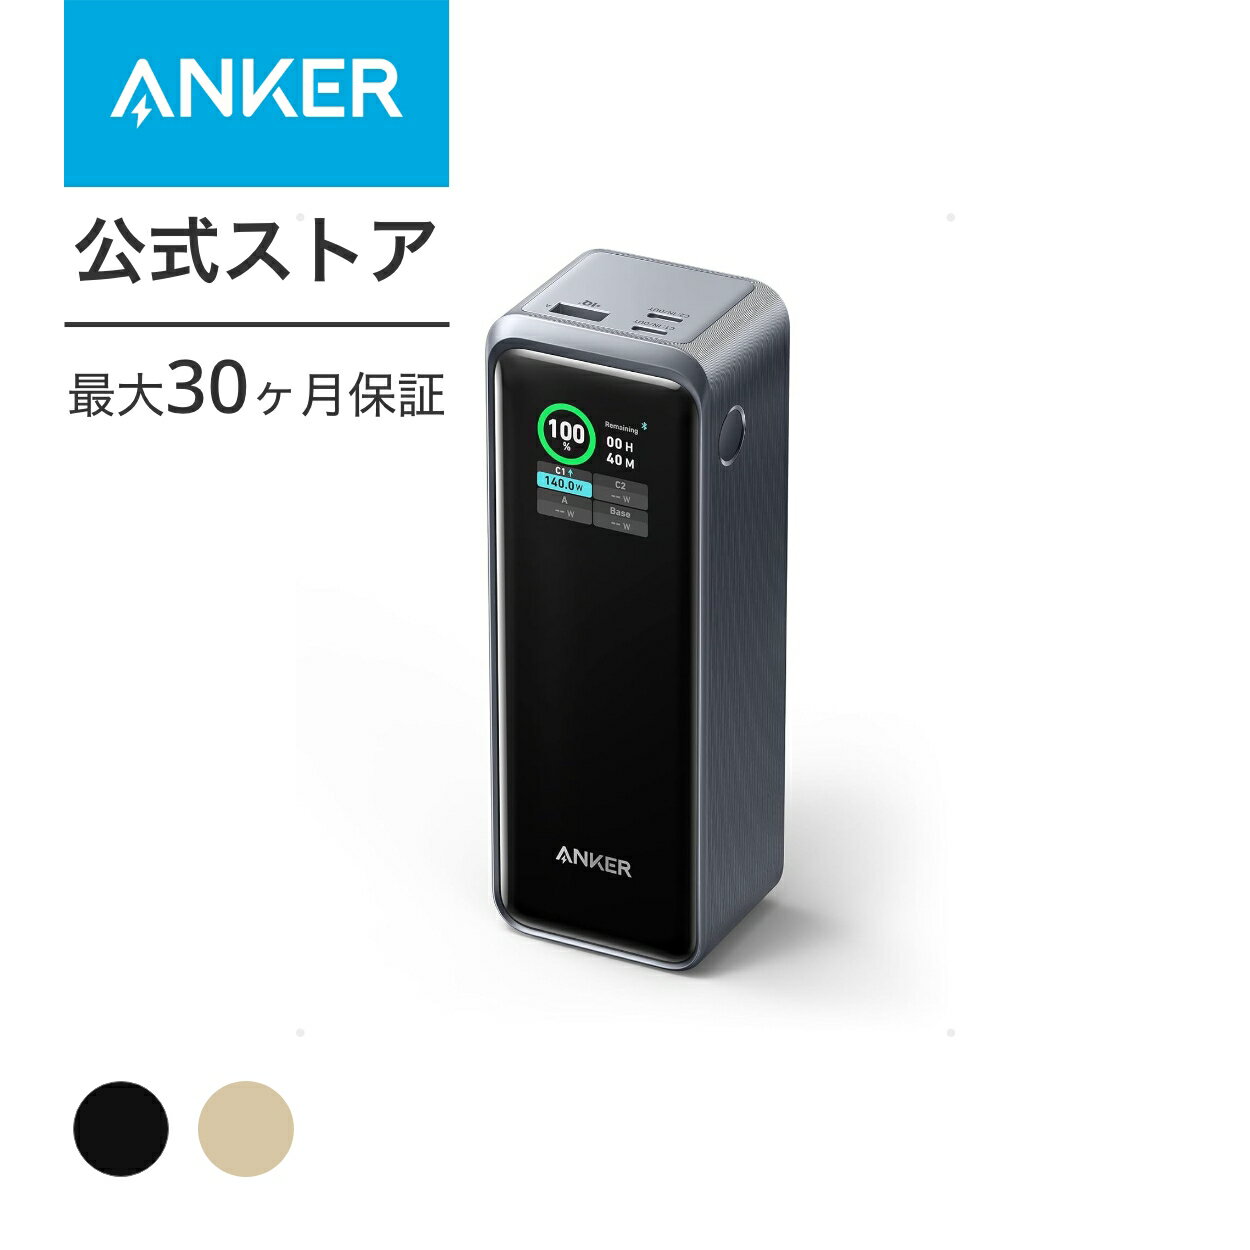 Anker Prime Power Bank (27650mAh, 250W) (モバイルバッテリー 27650mAh 合計250W出力 大容量 LEDディスプレイ搭載)【USB Power Deli